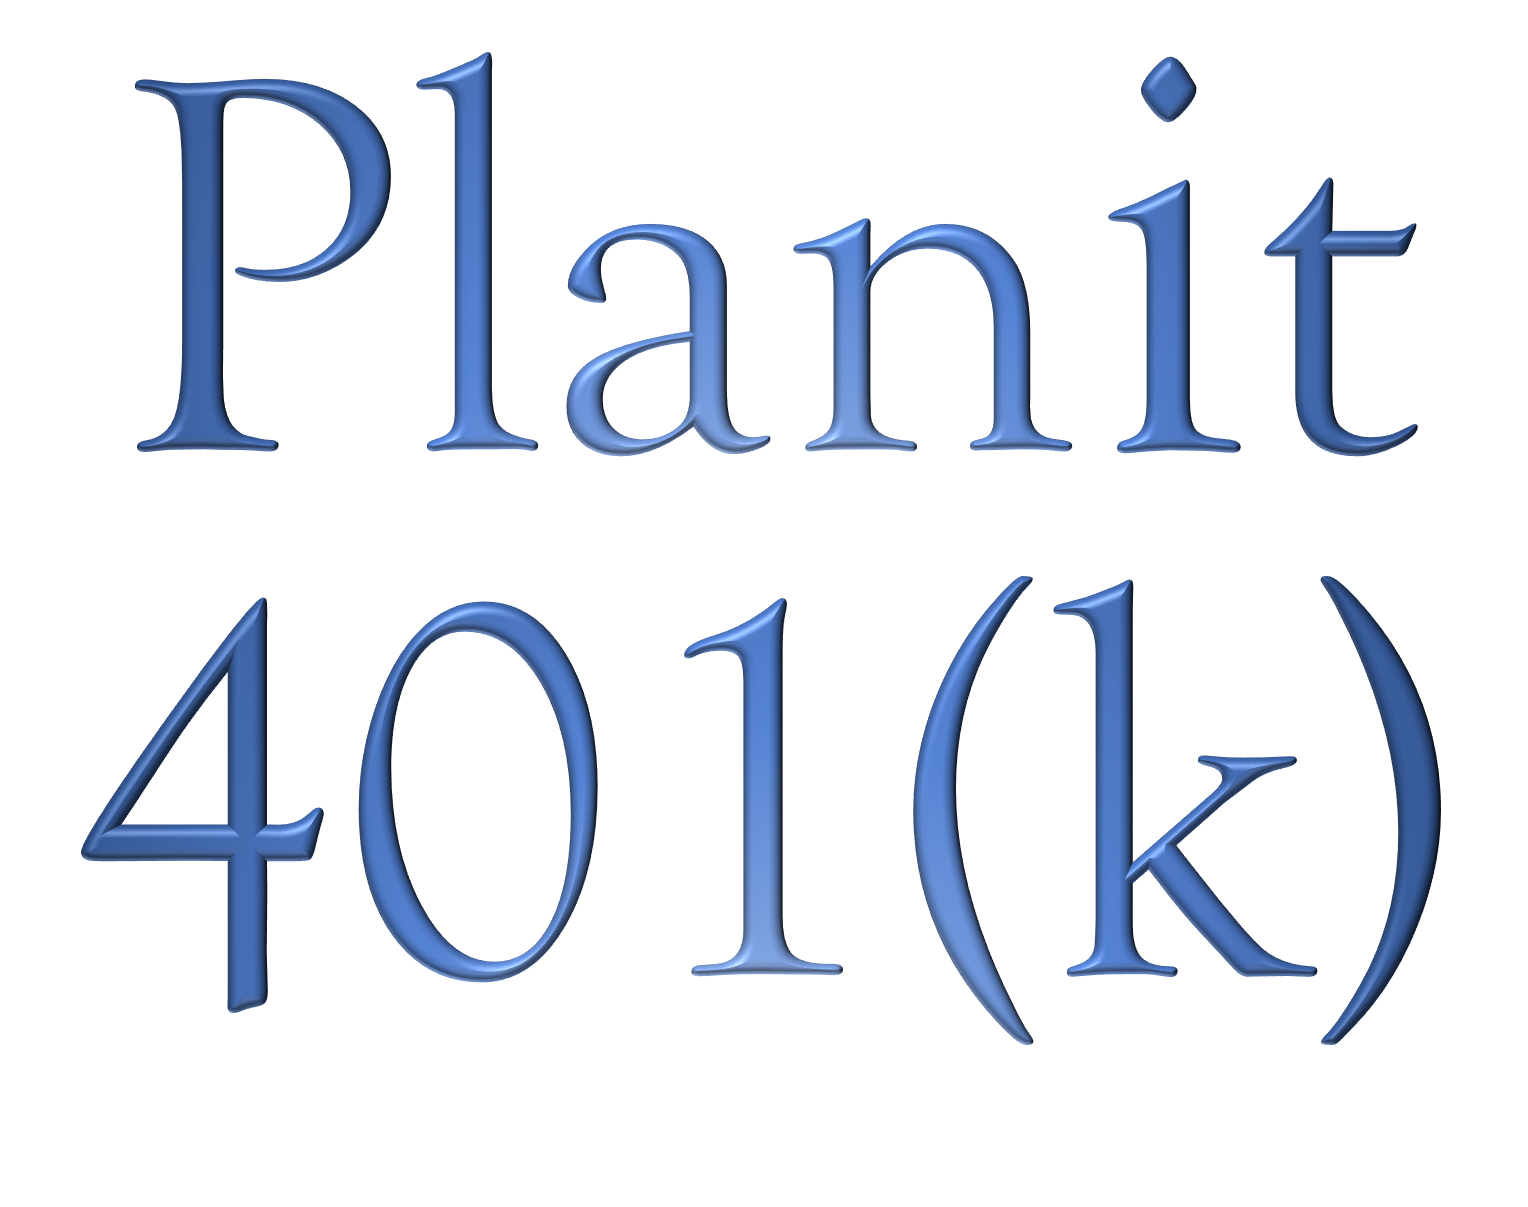 Planit 401k